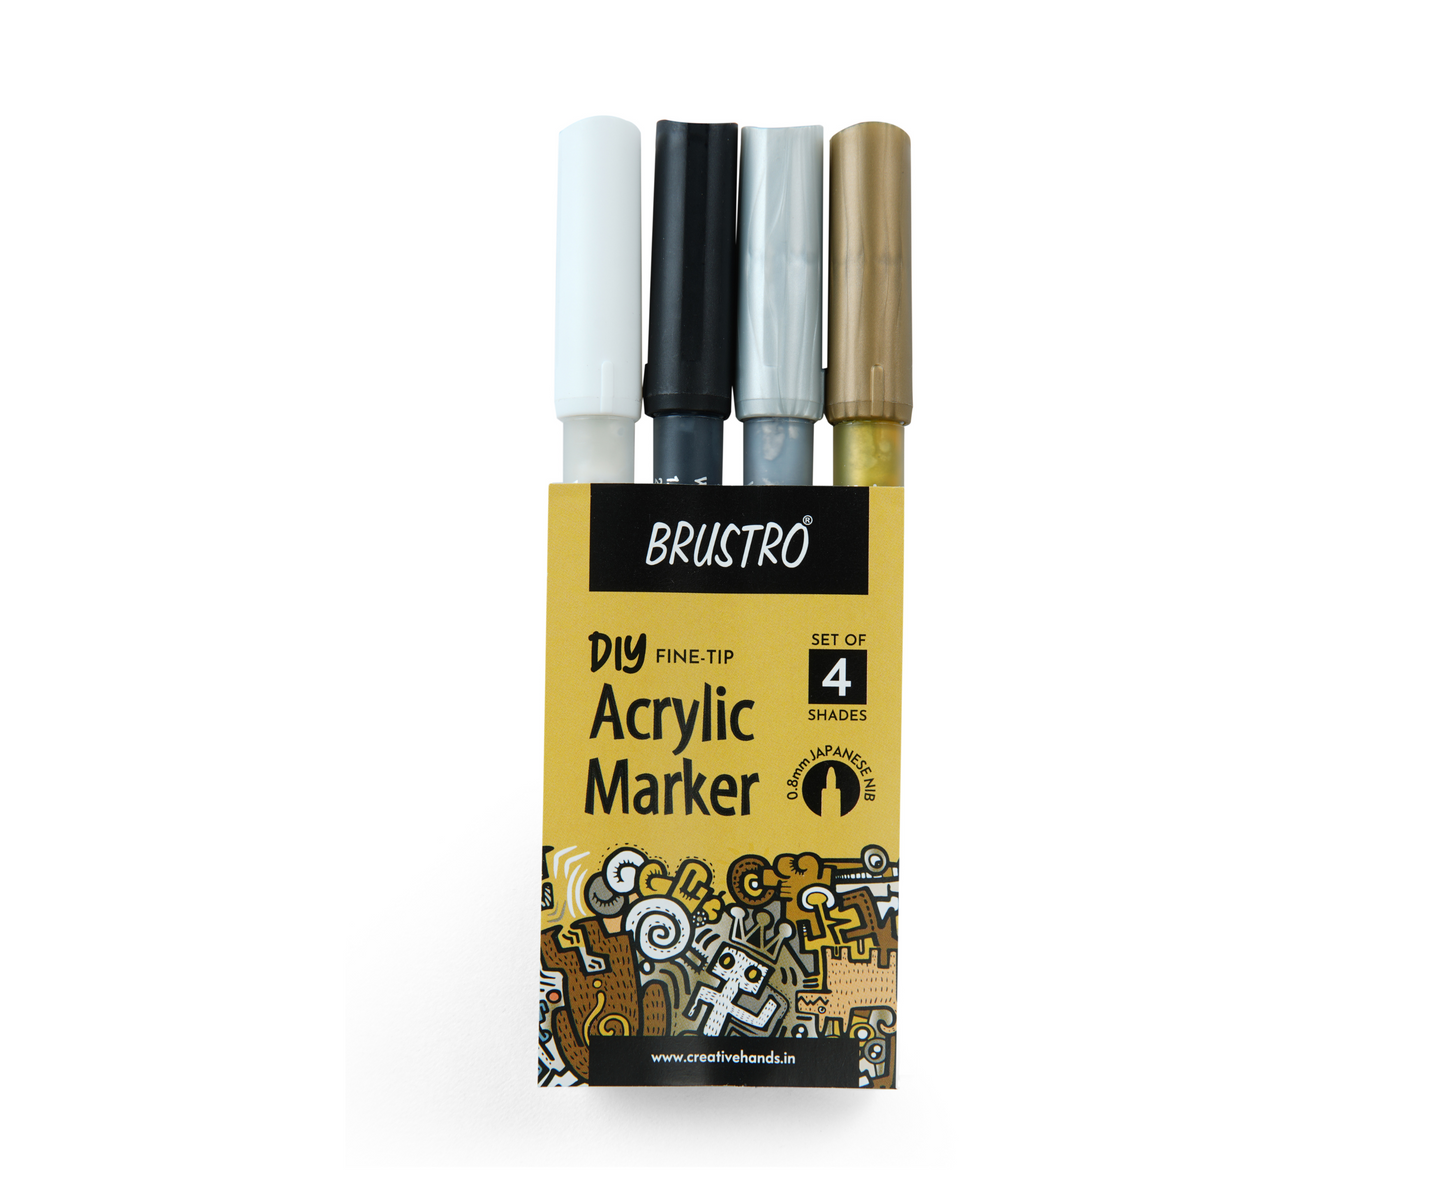 Brustro Acrylic (DIY) Fine Tip Marker Set of 4 – Gold, Silver, Black, White 0.8MM